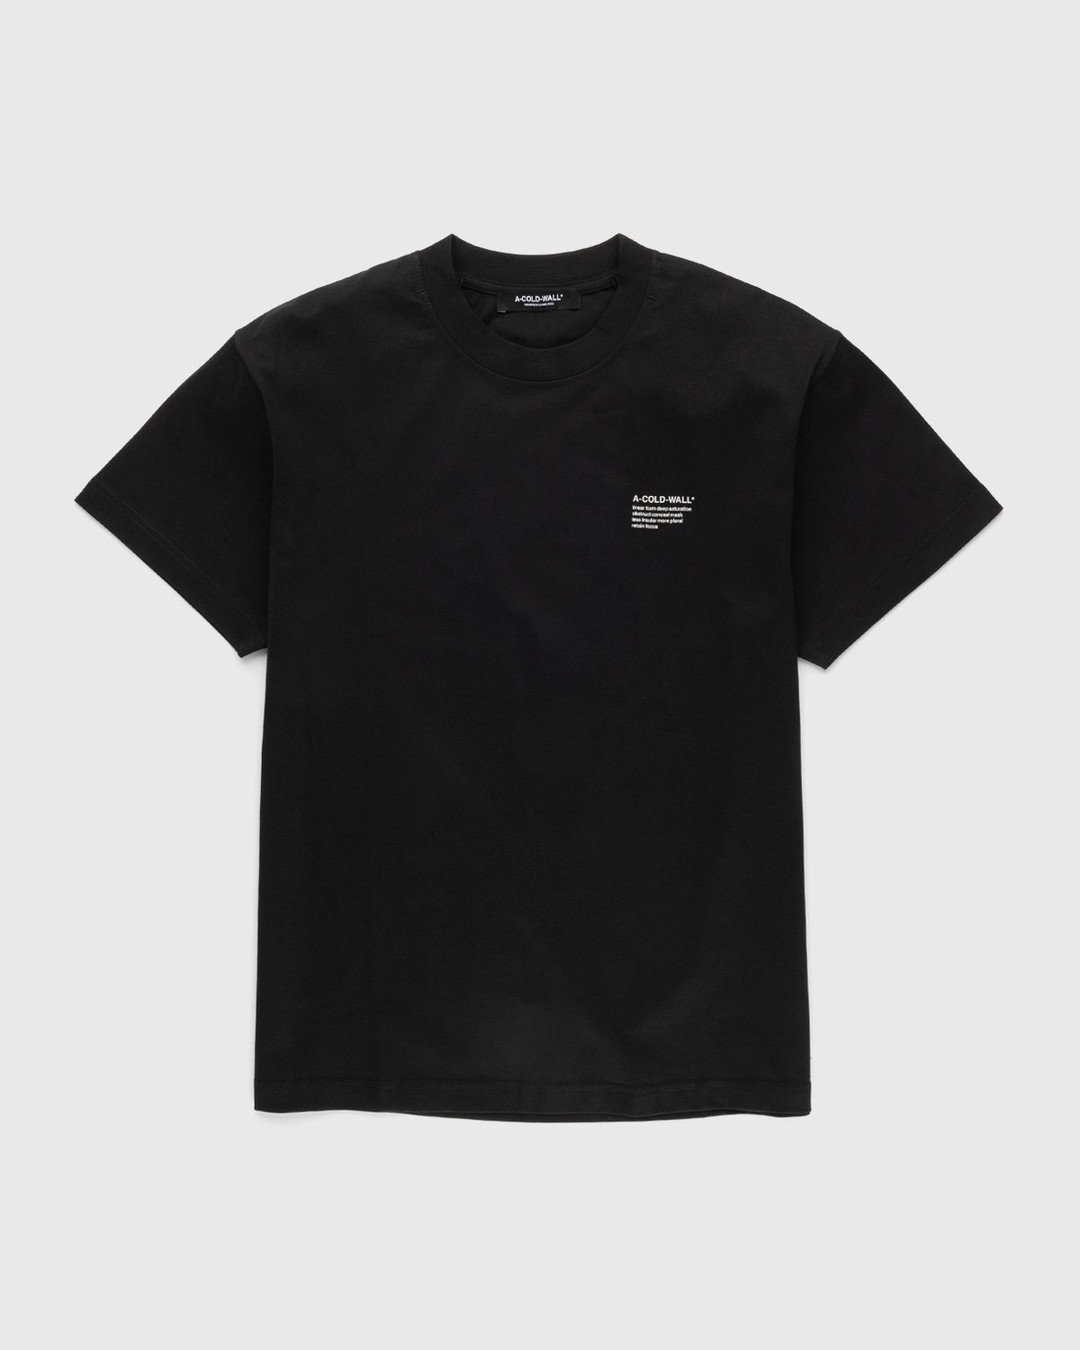 A-Cold-Wall* – Prose T-Shirt Black - T-Shirts - Black - Image 1